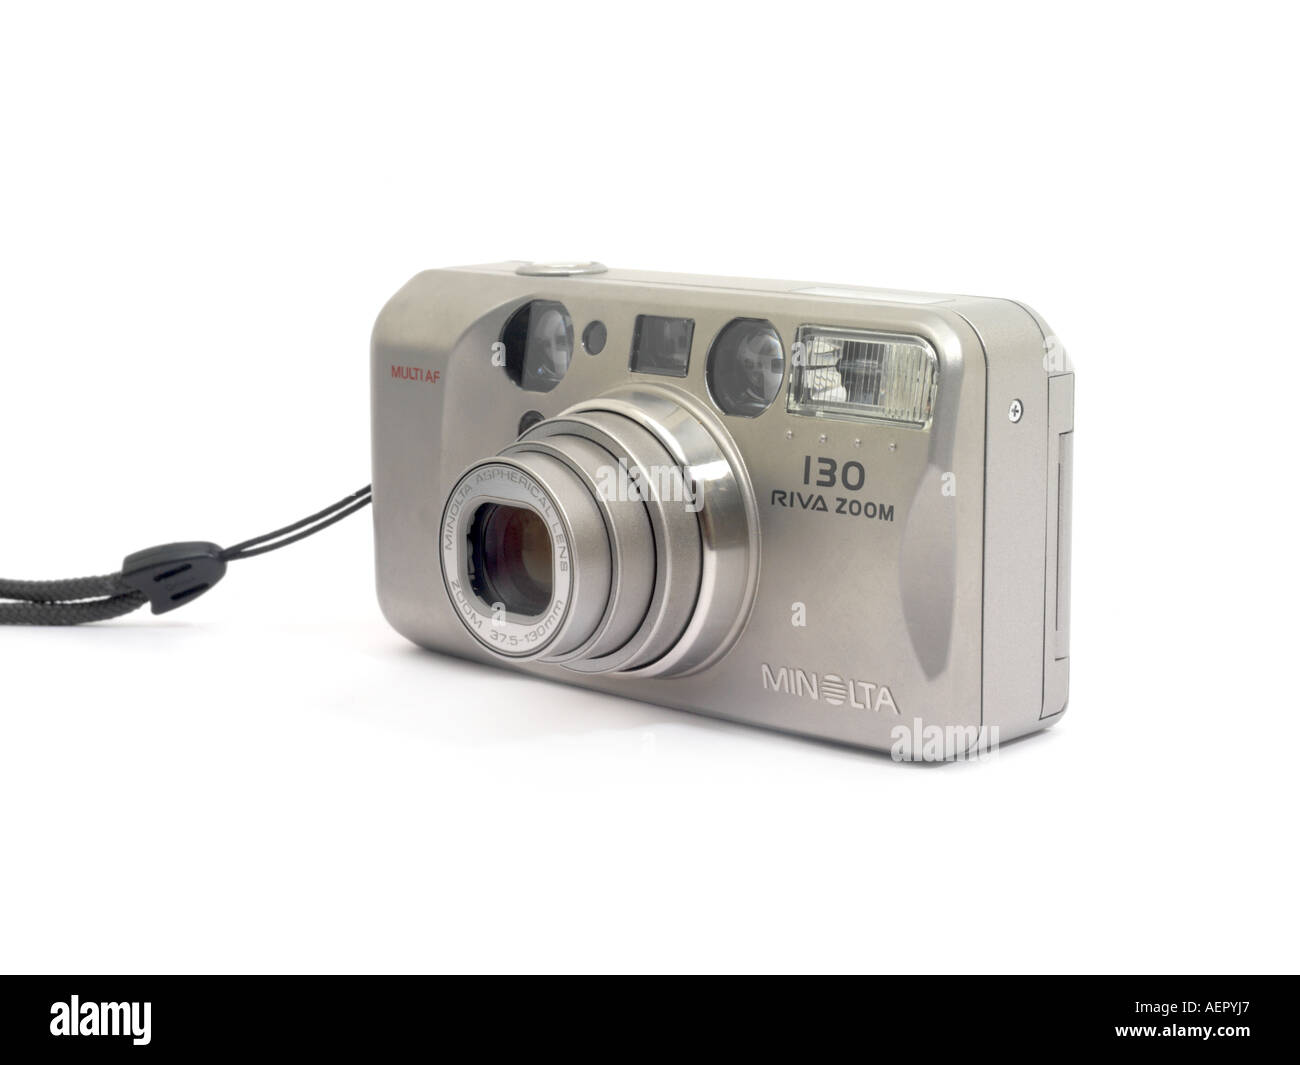 Minolta 130 Riva Zoom Film Camera Stock Photo